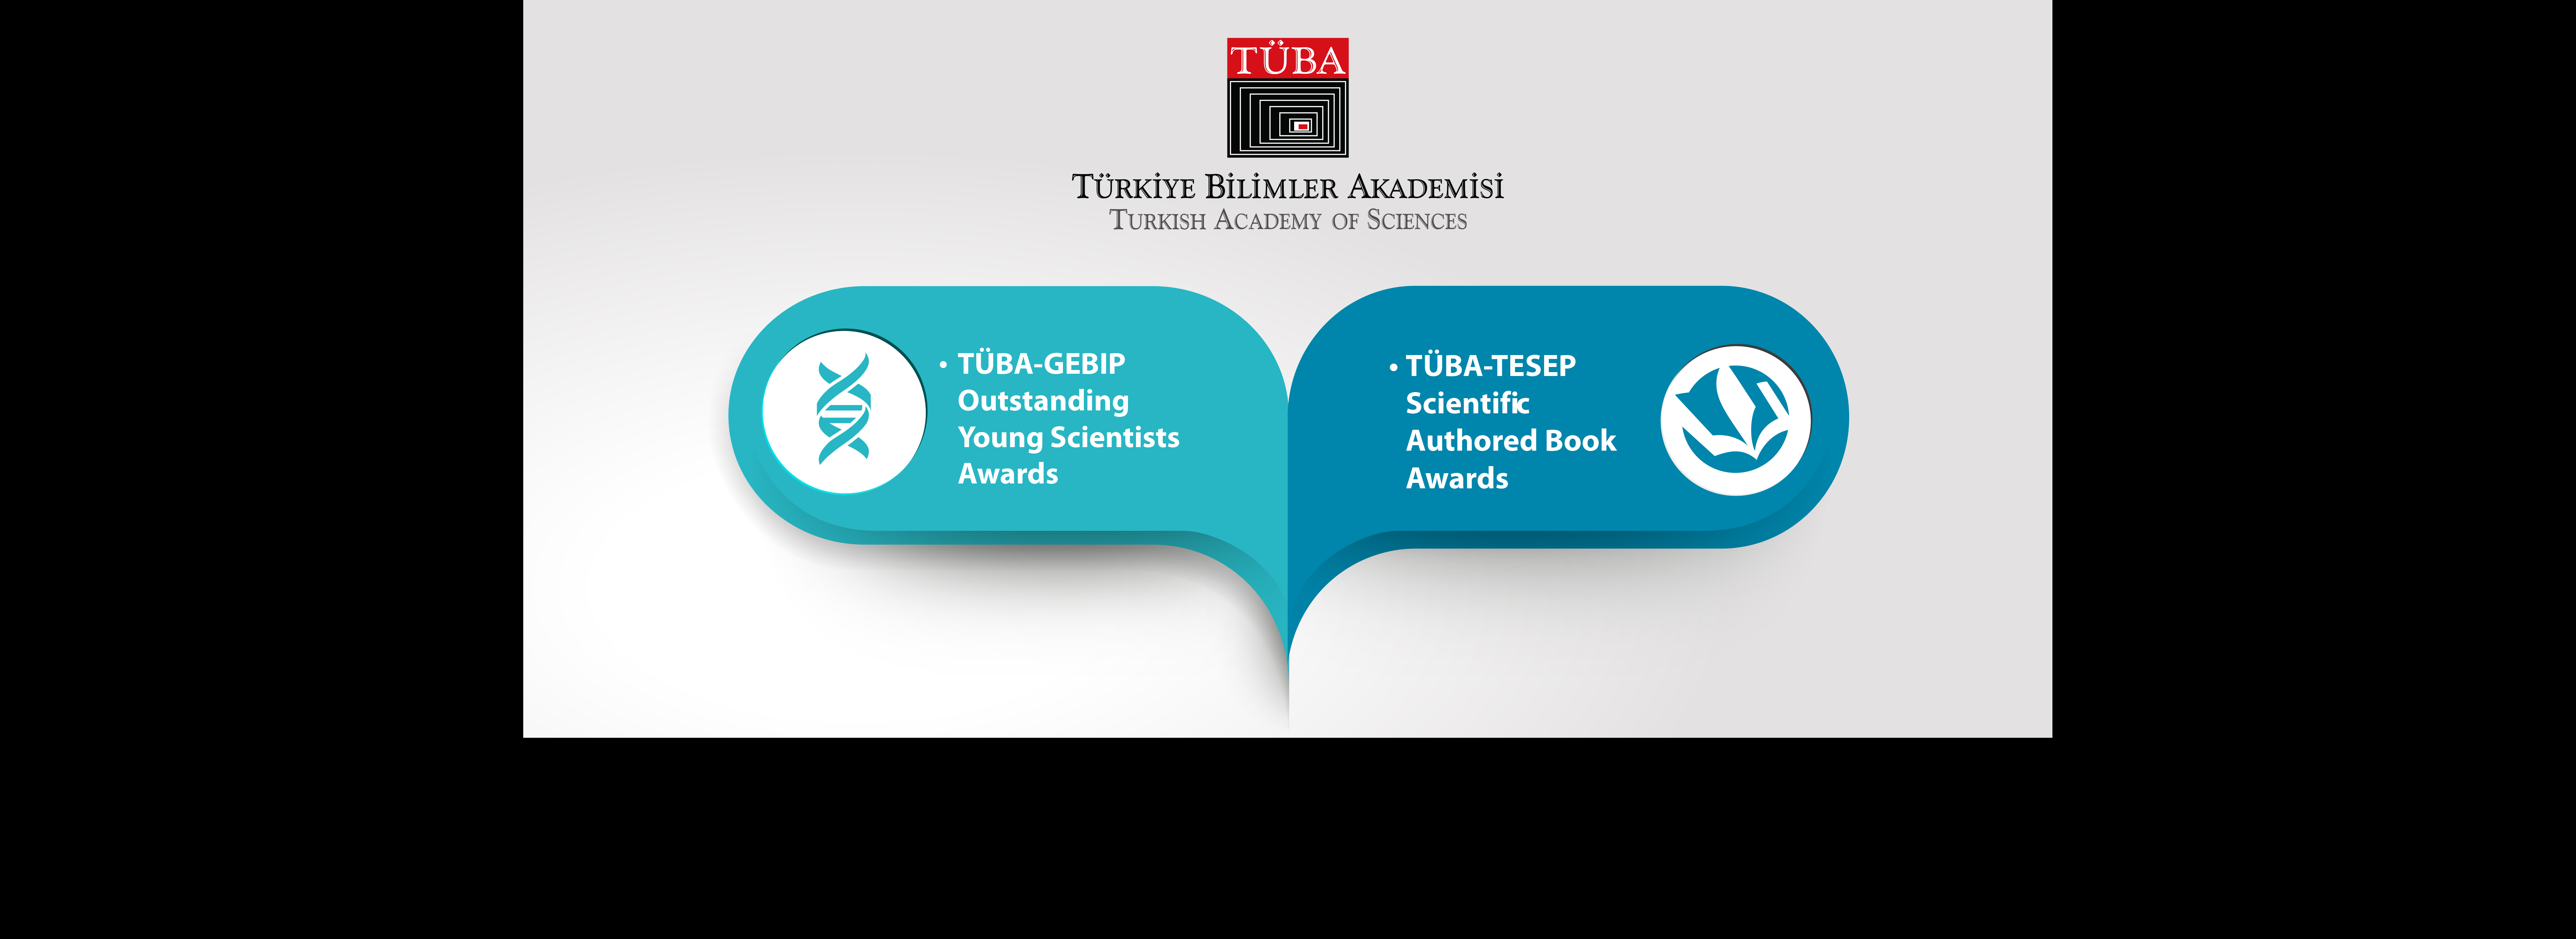 2023 TÜBA GEBIP and TESEP Awards Announced